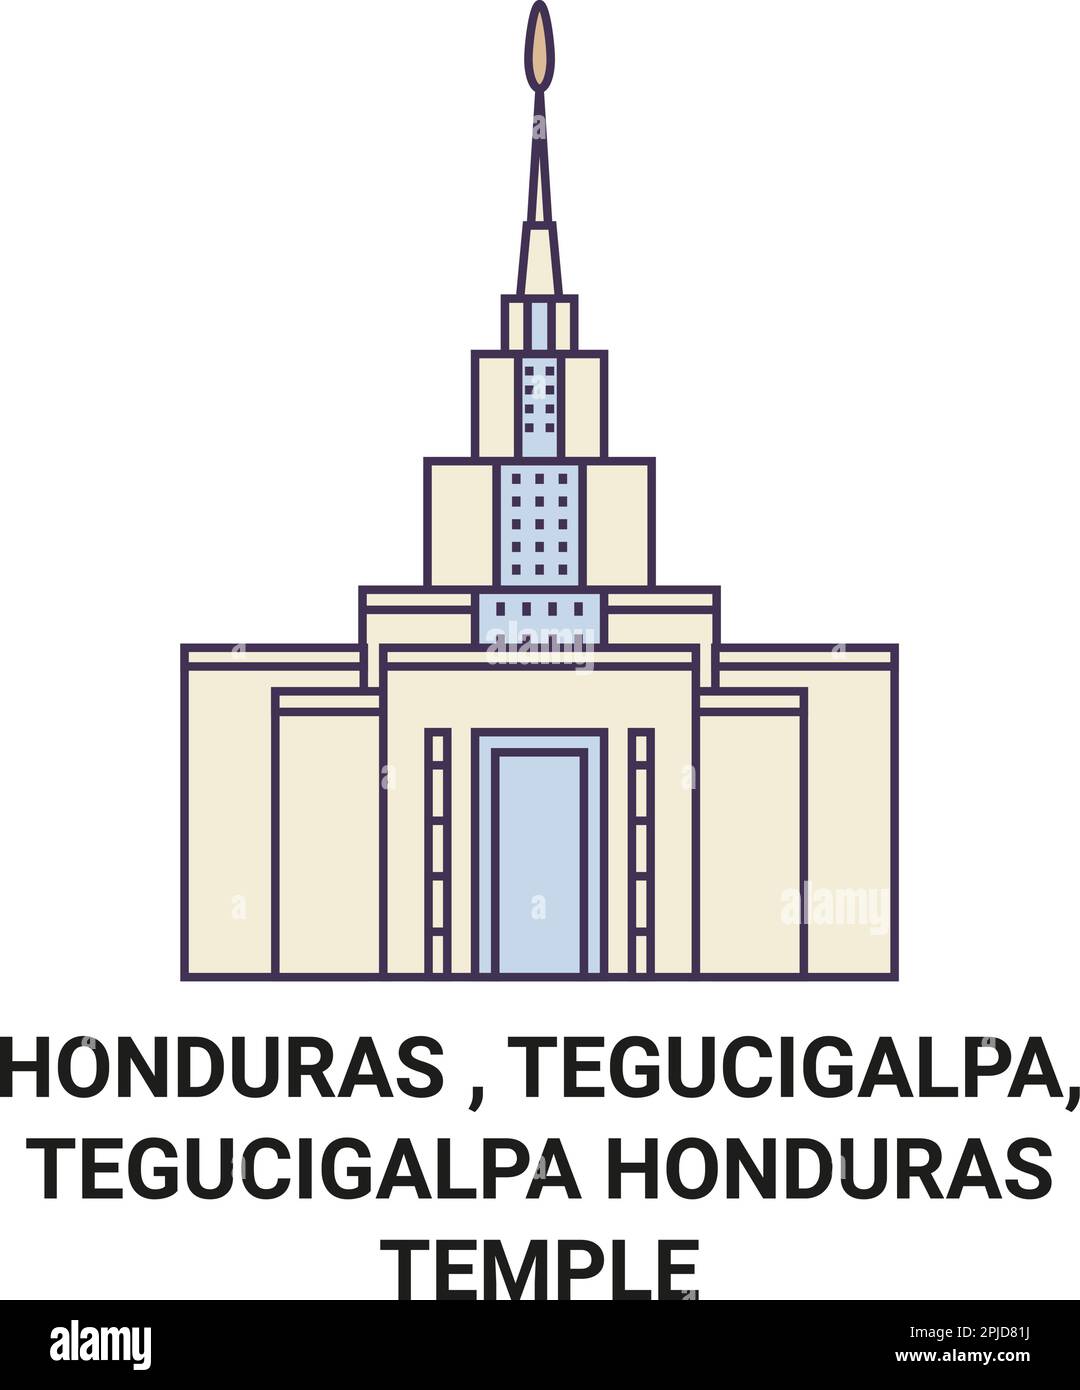 Honduras , Tegucigalpa, Tegucigalpa Temple du Honduras illustration vectorielle de voyage Illustration de Vecteur